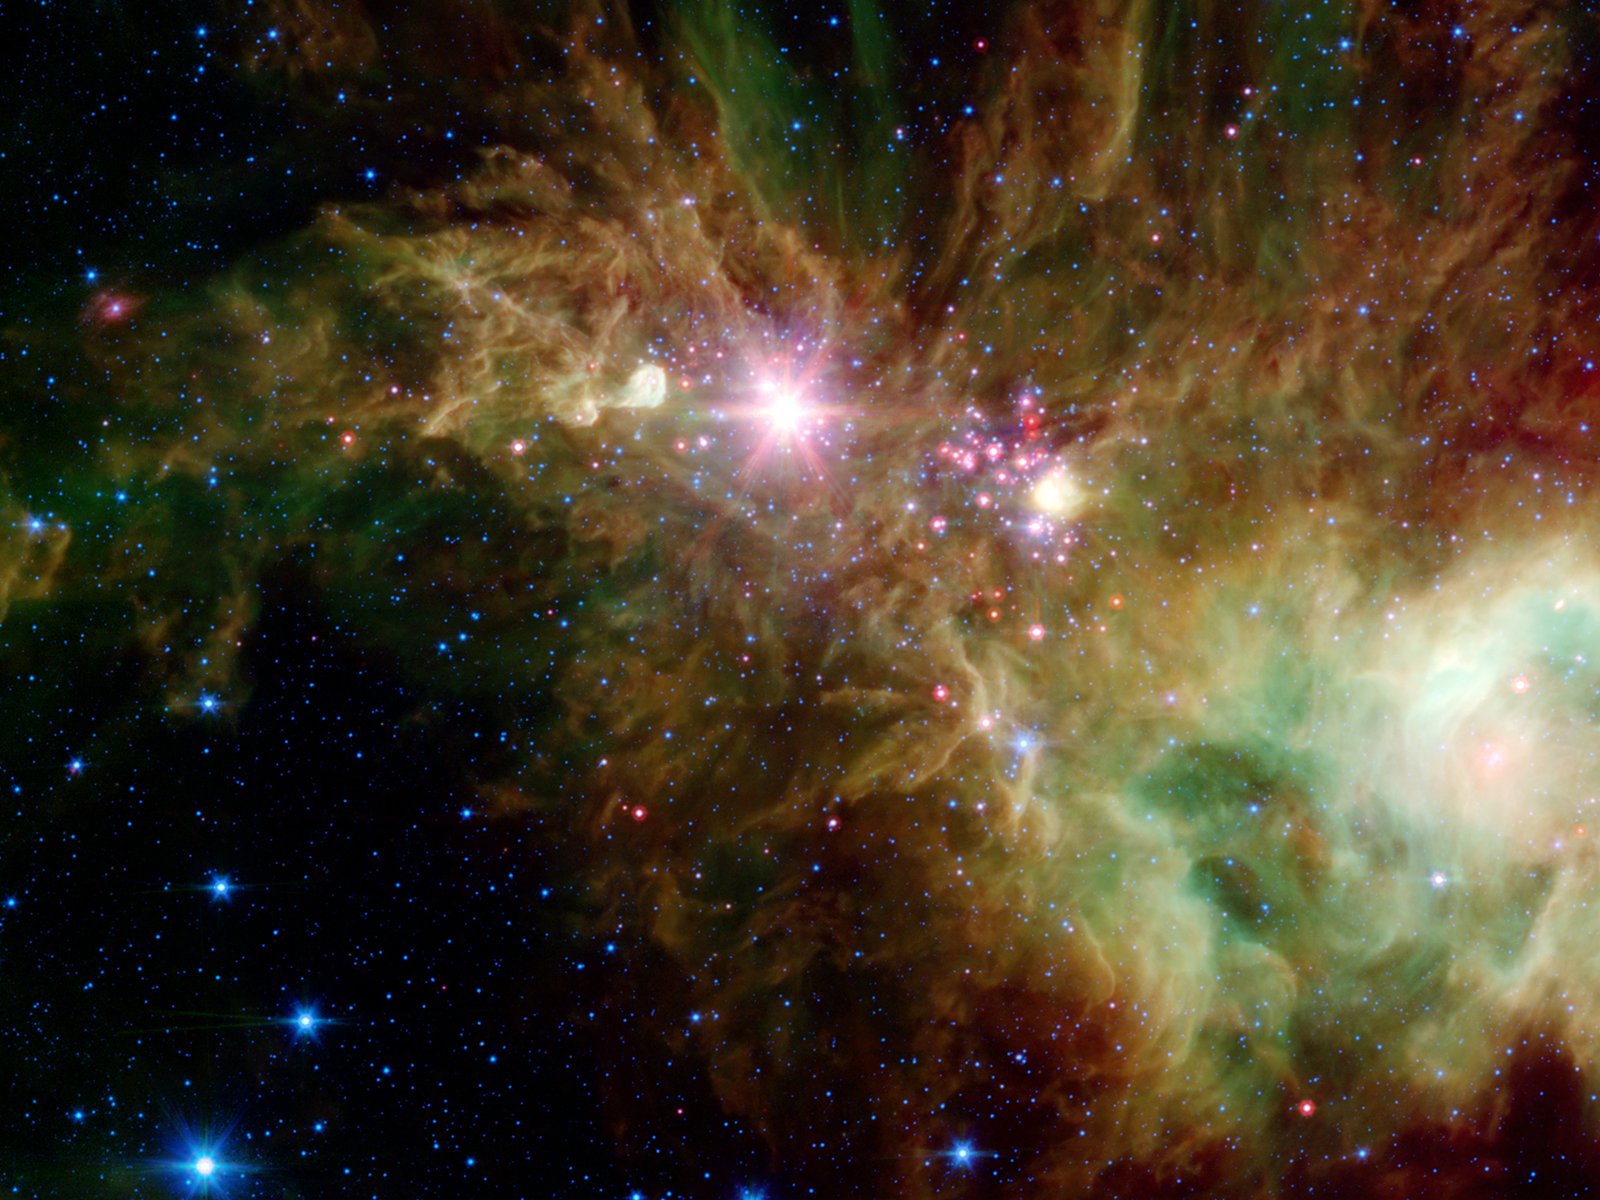 http://larvalsubjects.files.wordpress.com/2009/02/stellar-nebula-cone-nebula-stars-wallpaper.jpg